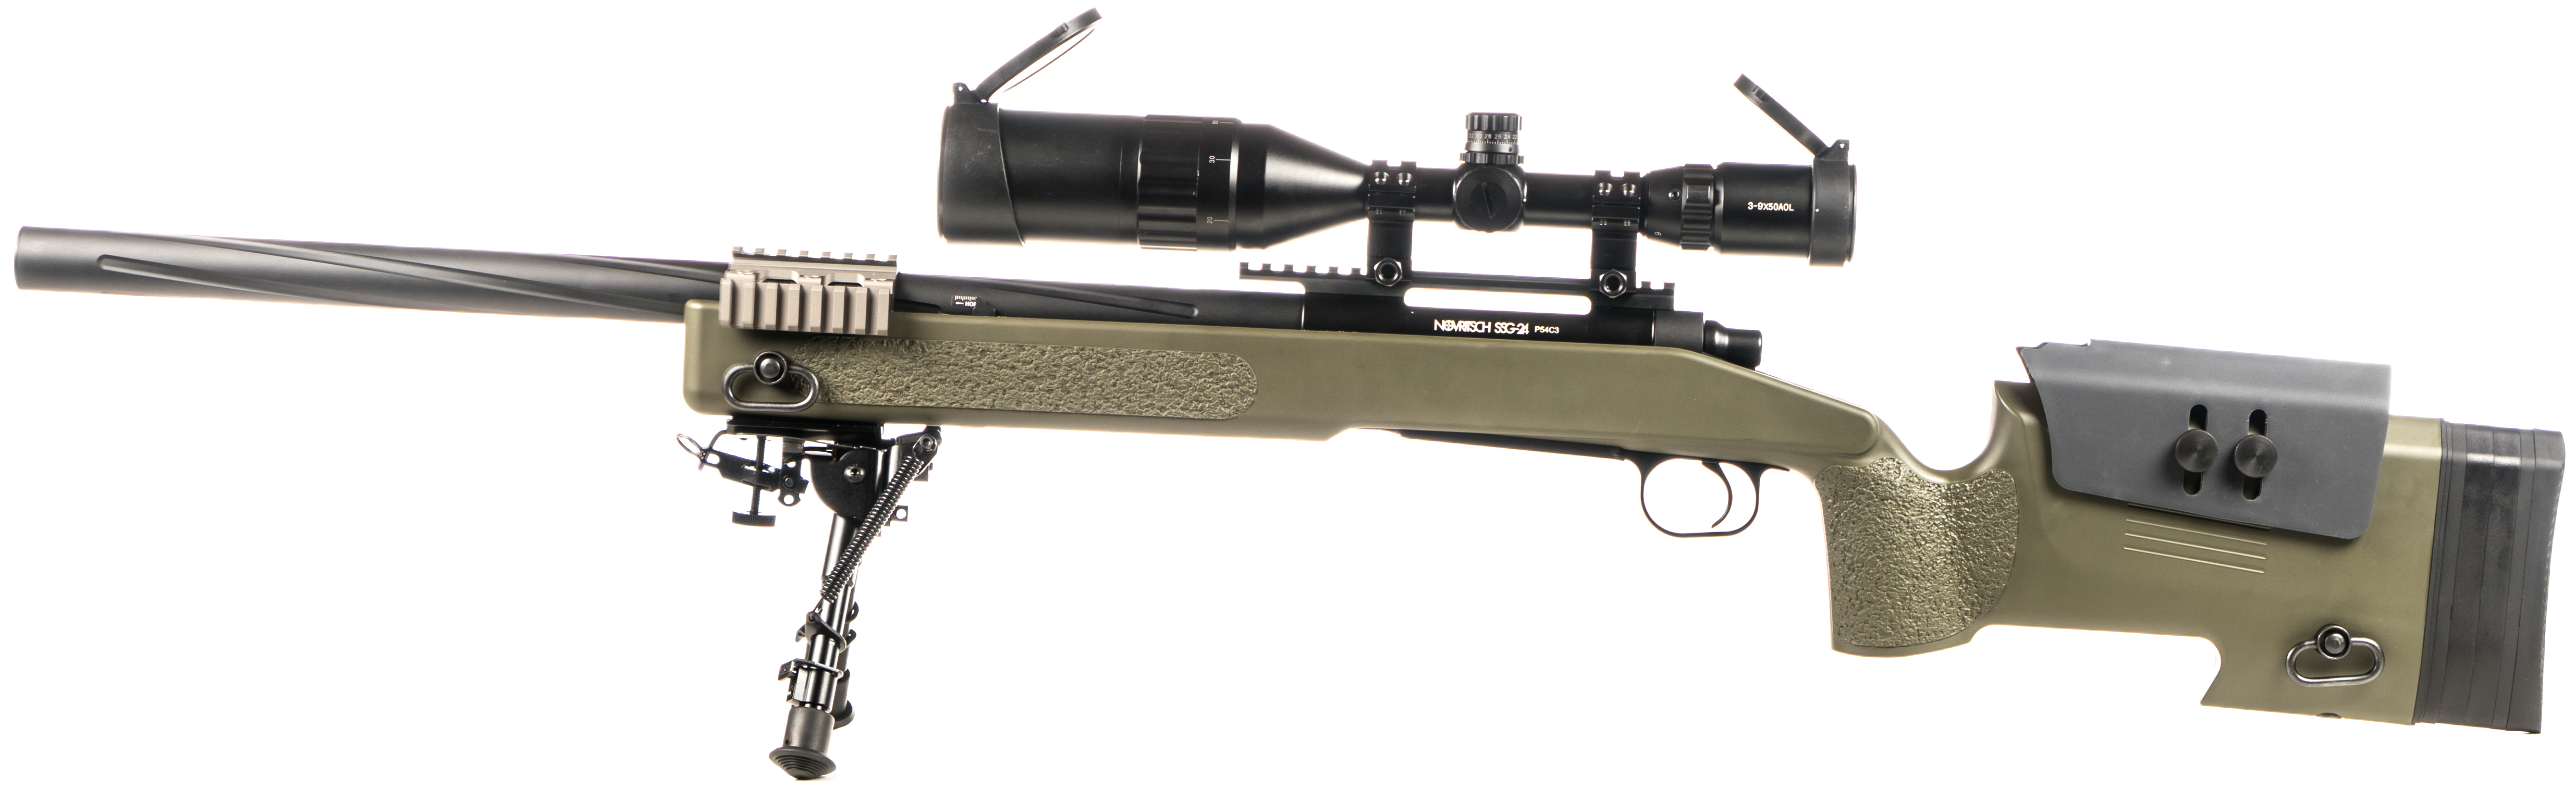 Novritsch Sniper Airsoft Rifle Ssg24 Rail M40 Kit Conversion Scope Bipod.